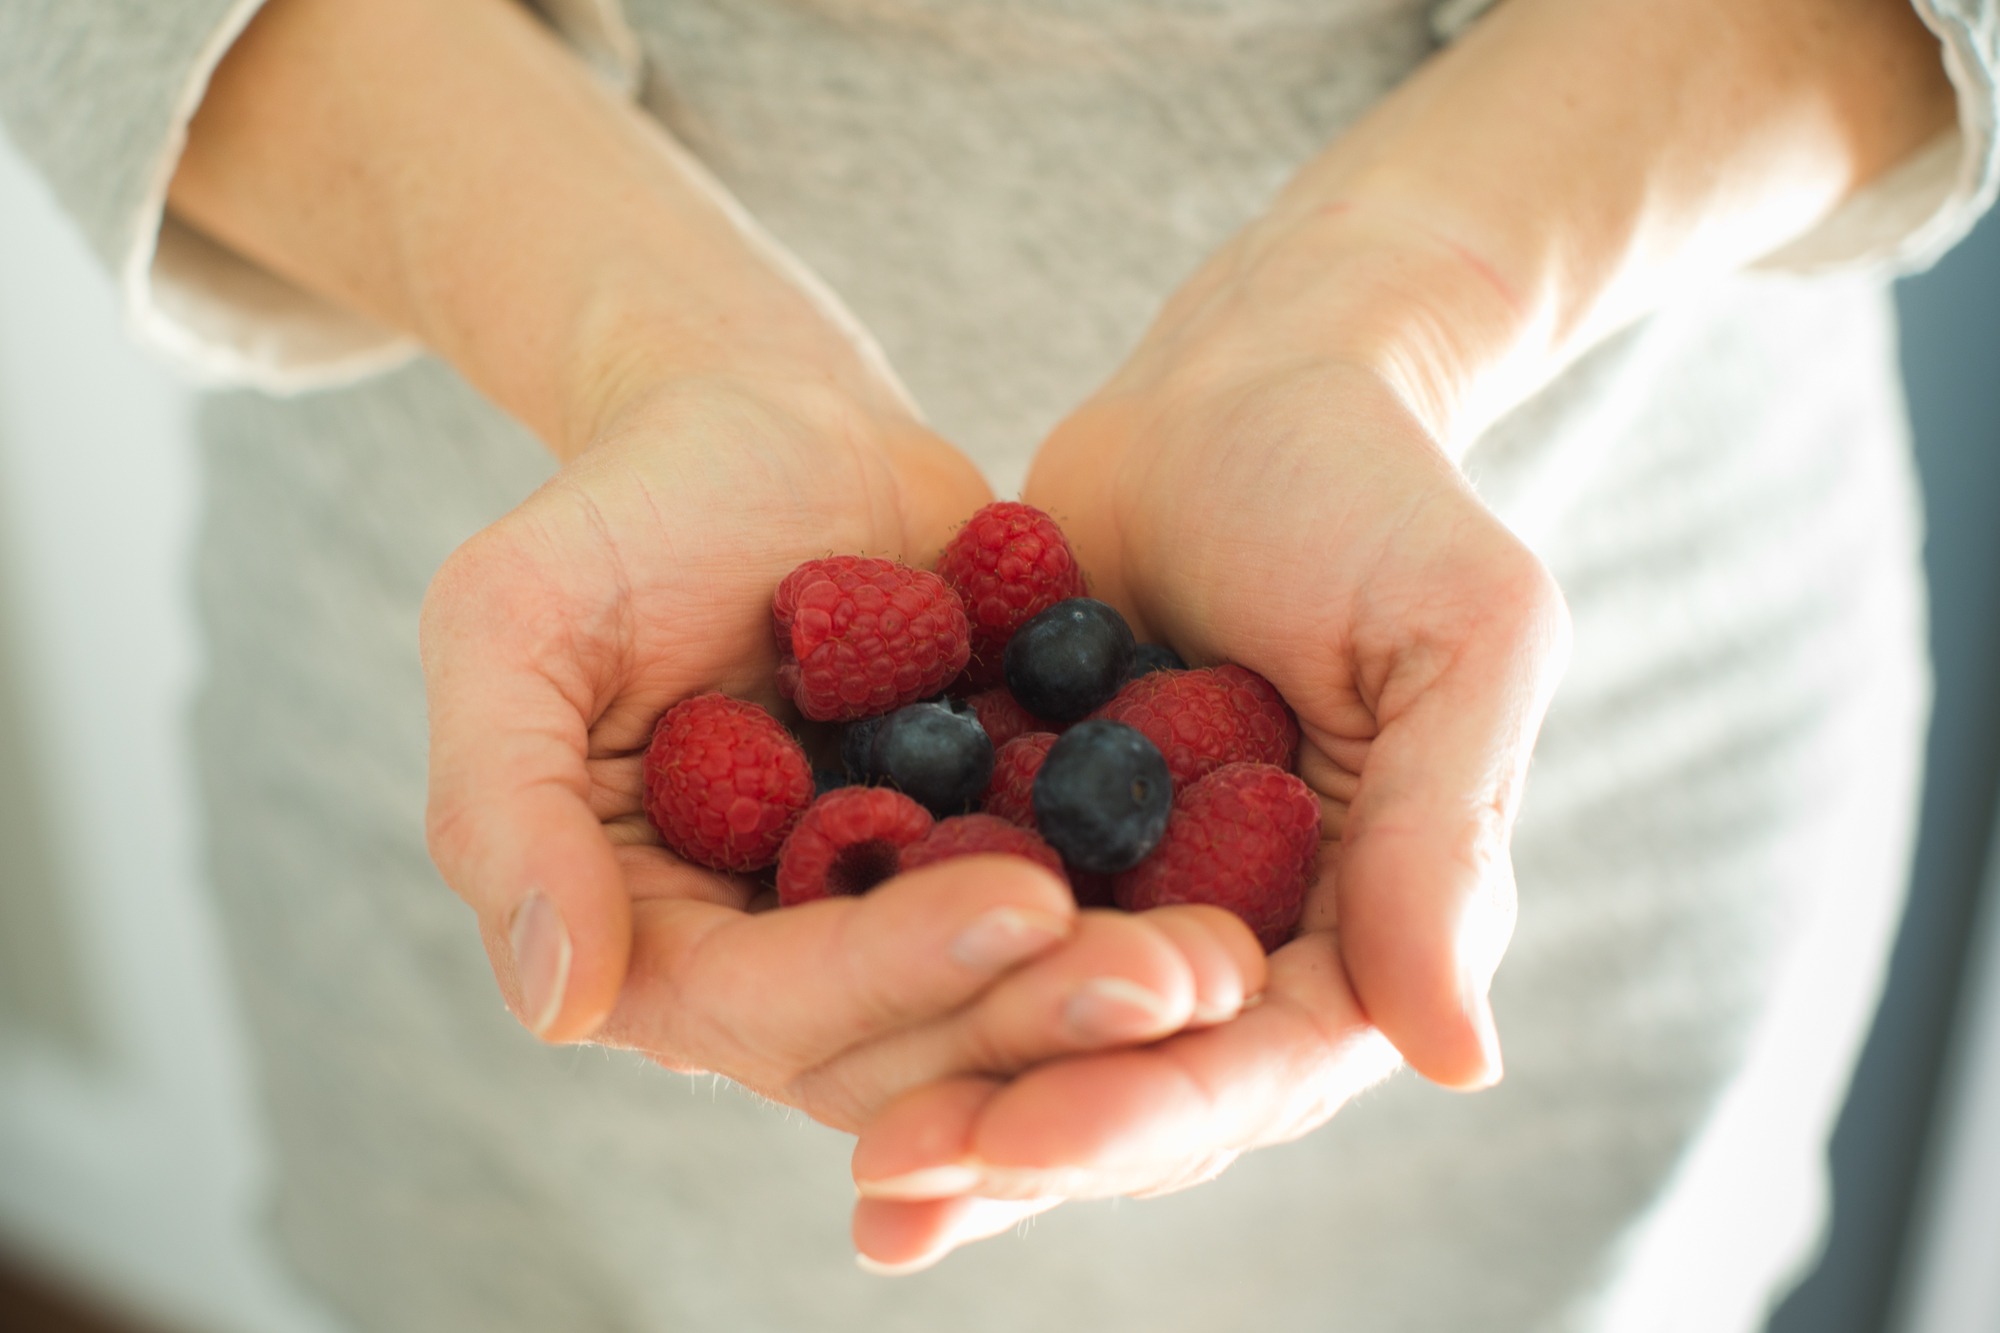 woman's hands hold raspberries